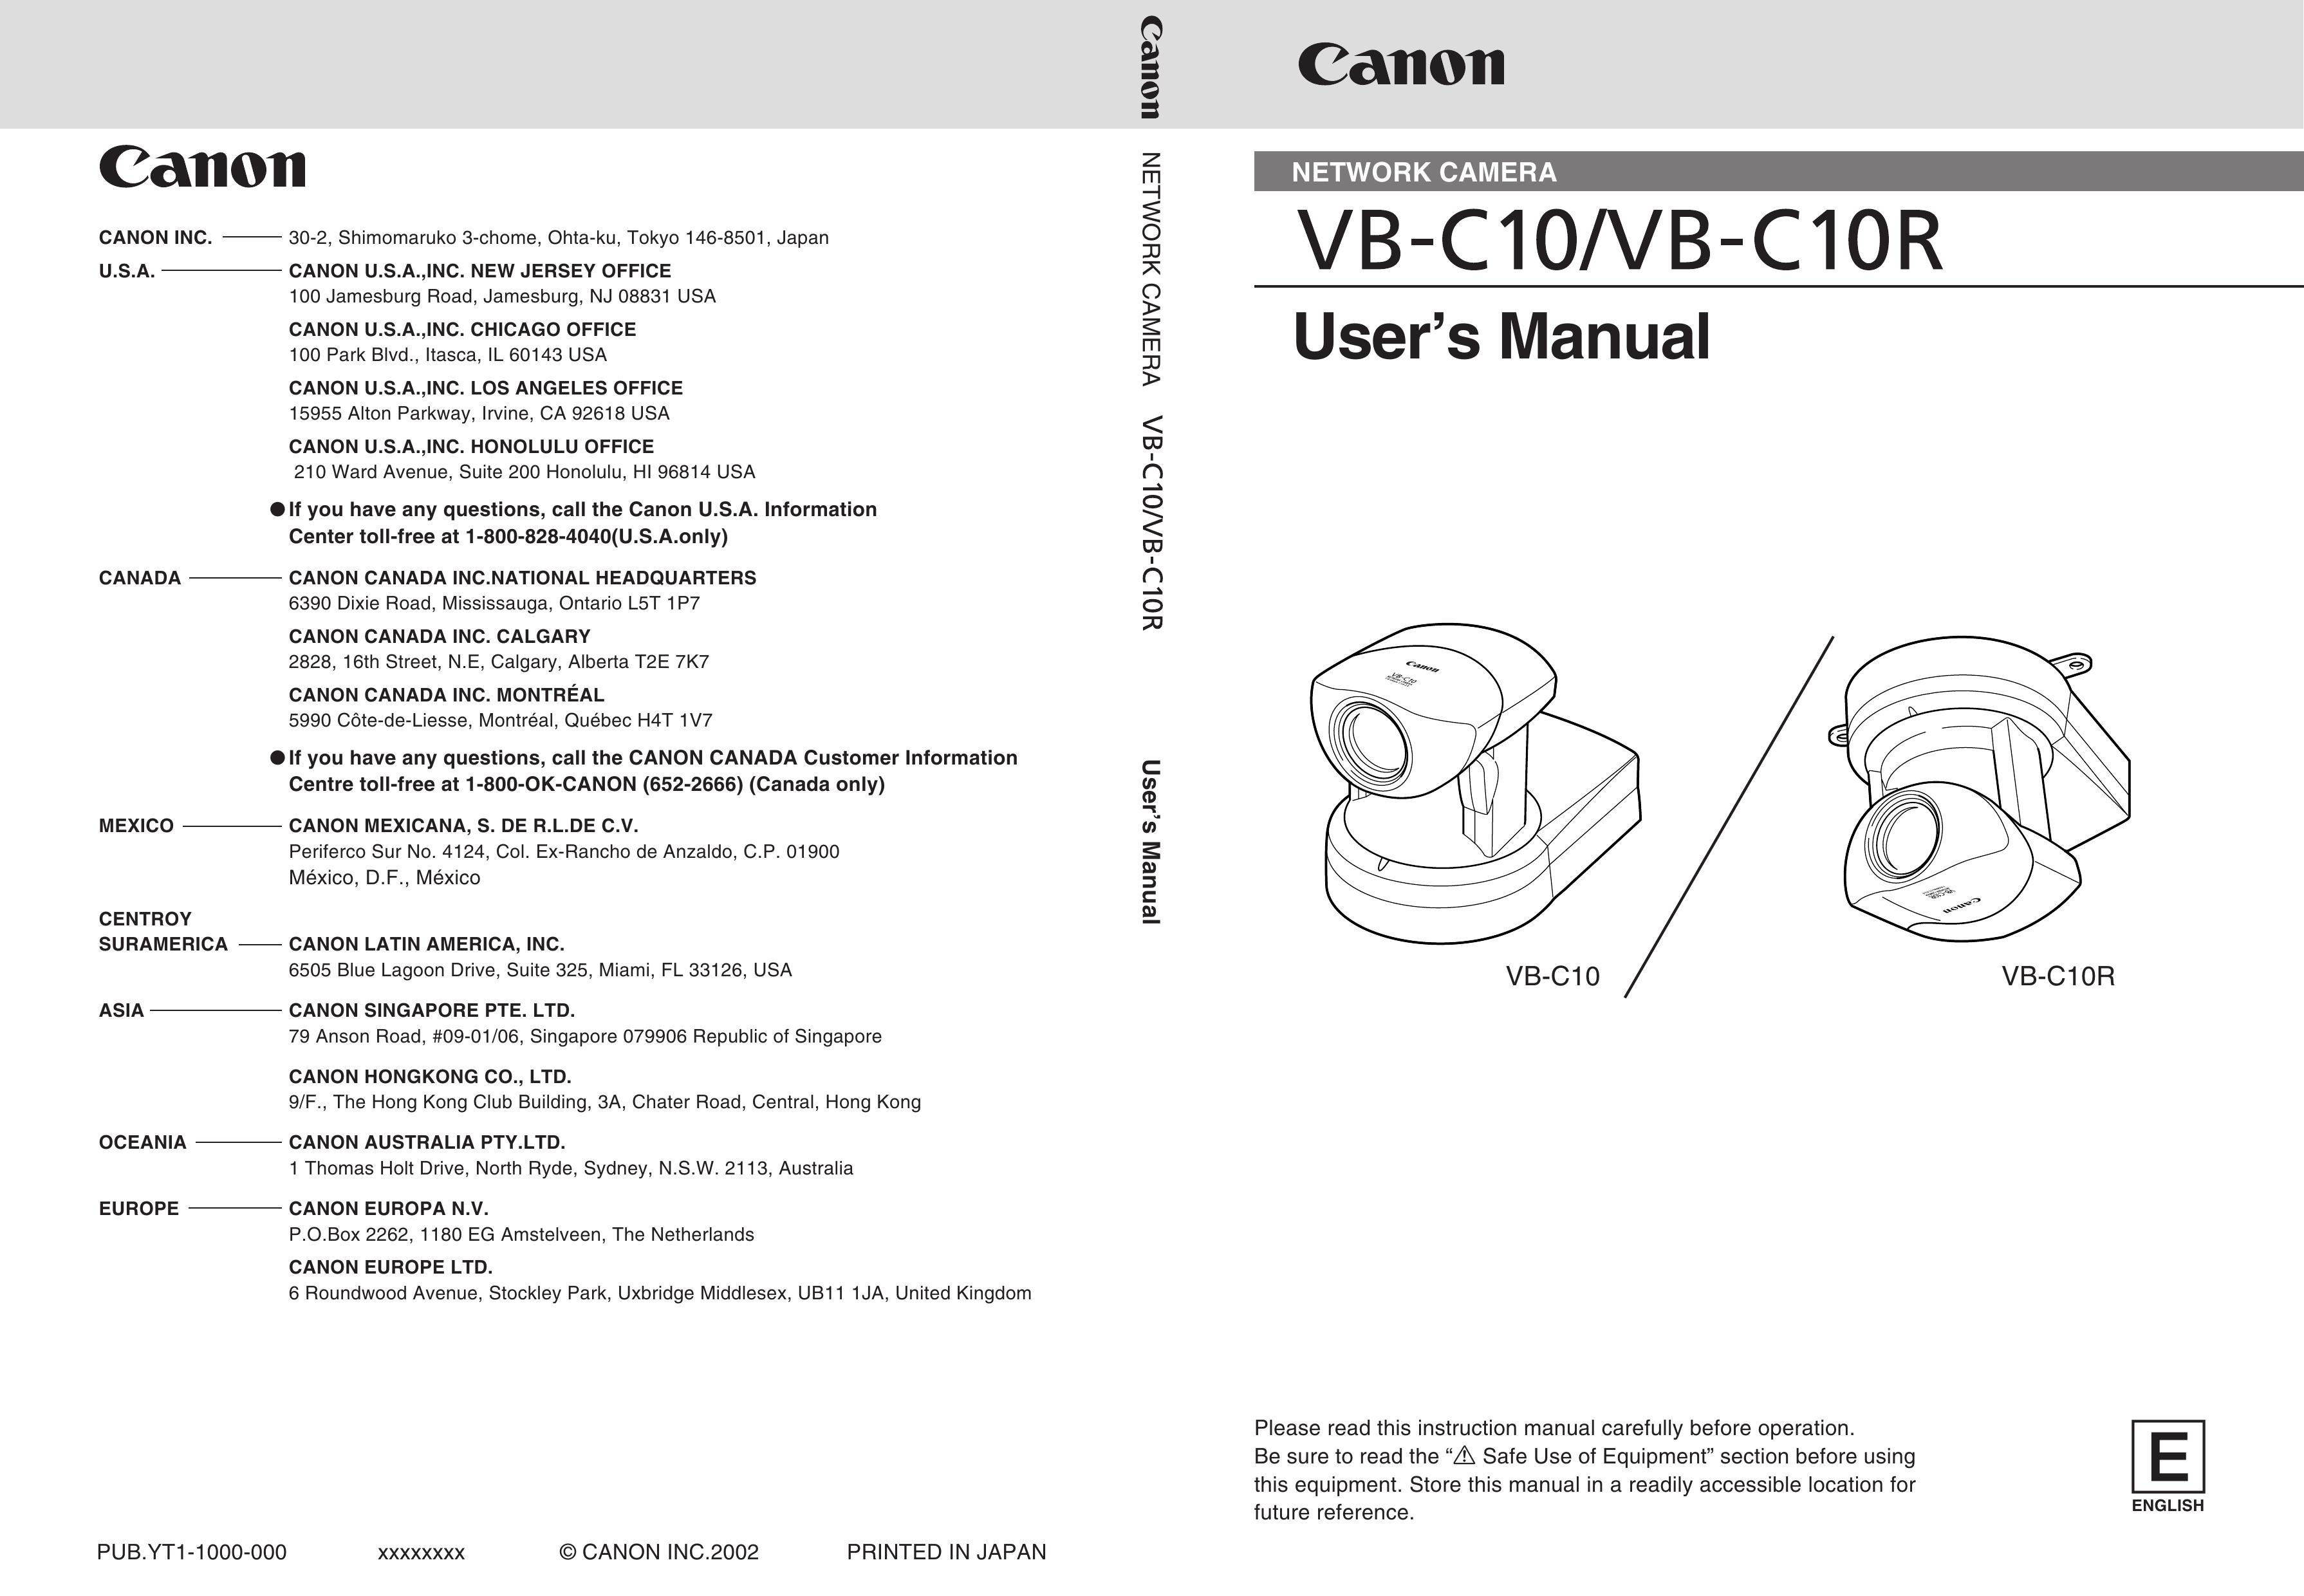 Canon VB-C10R Security Camera User Manual